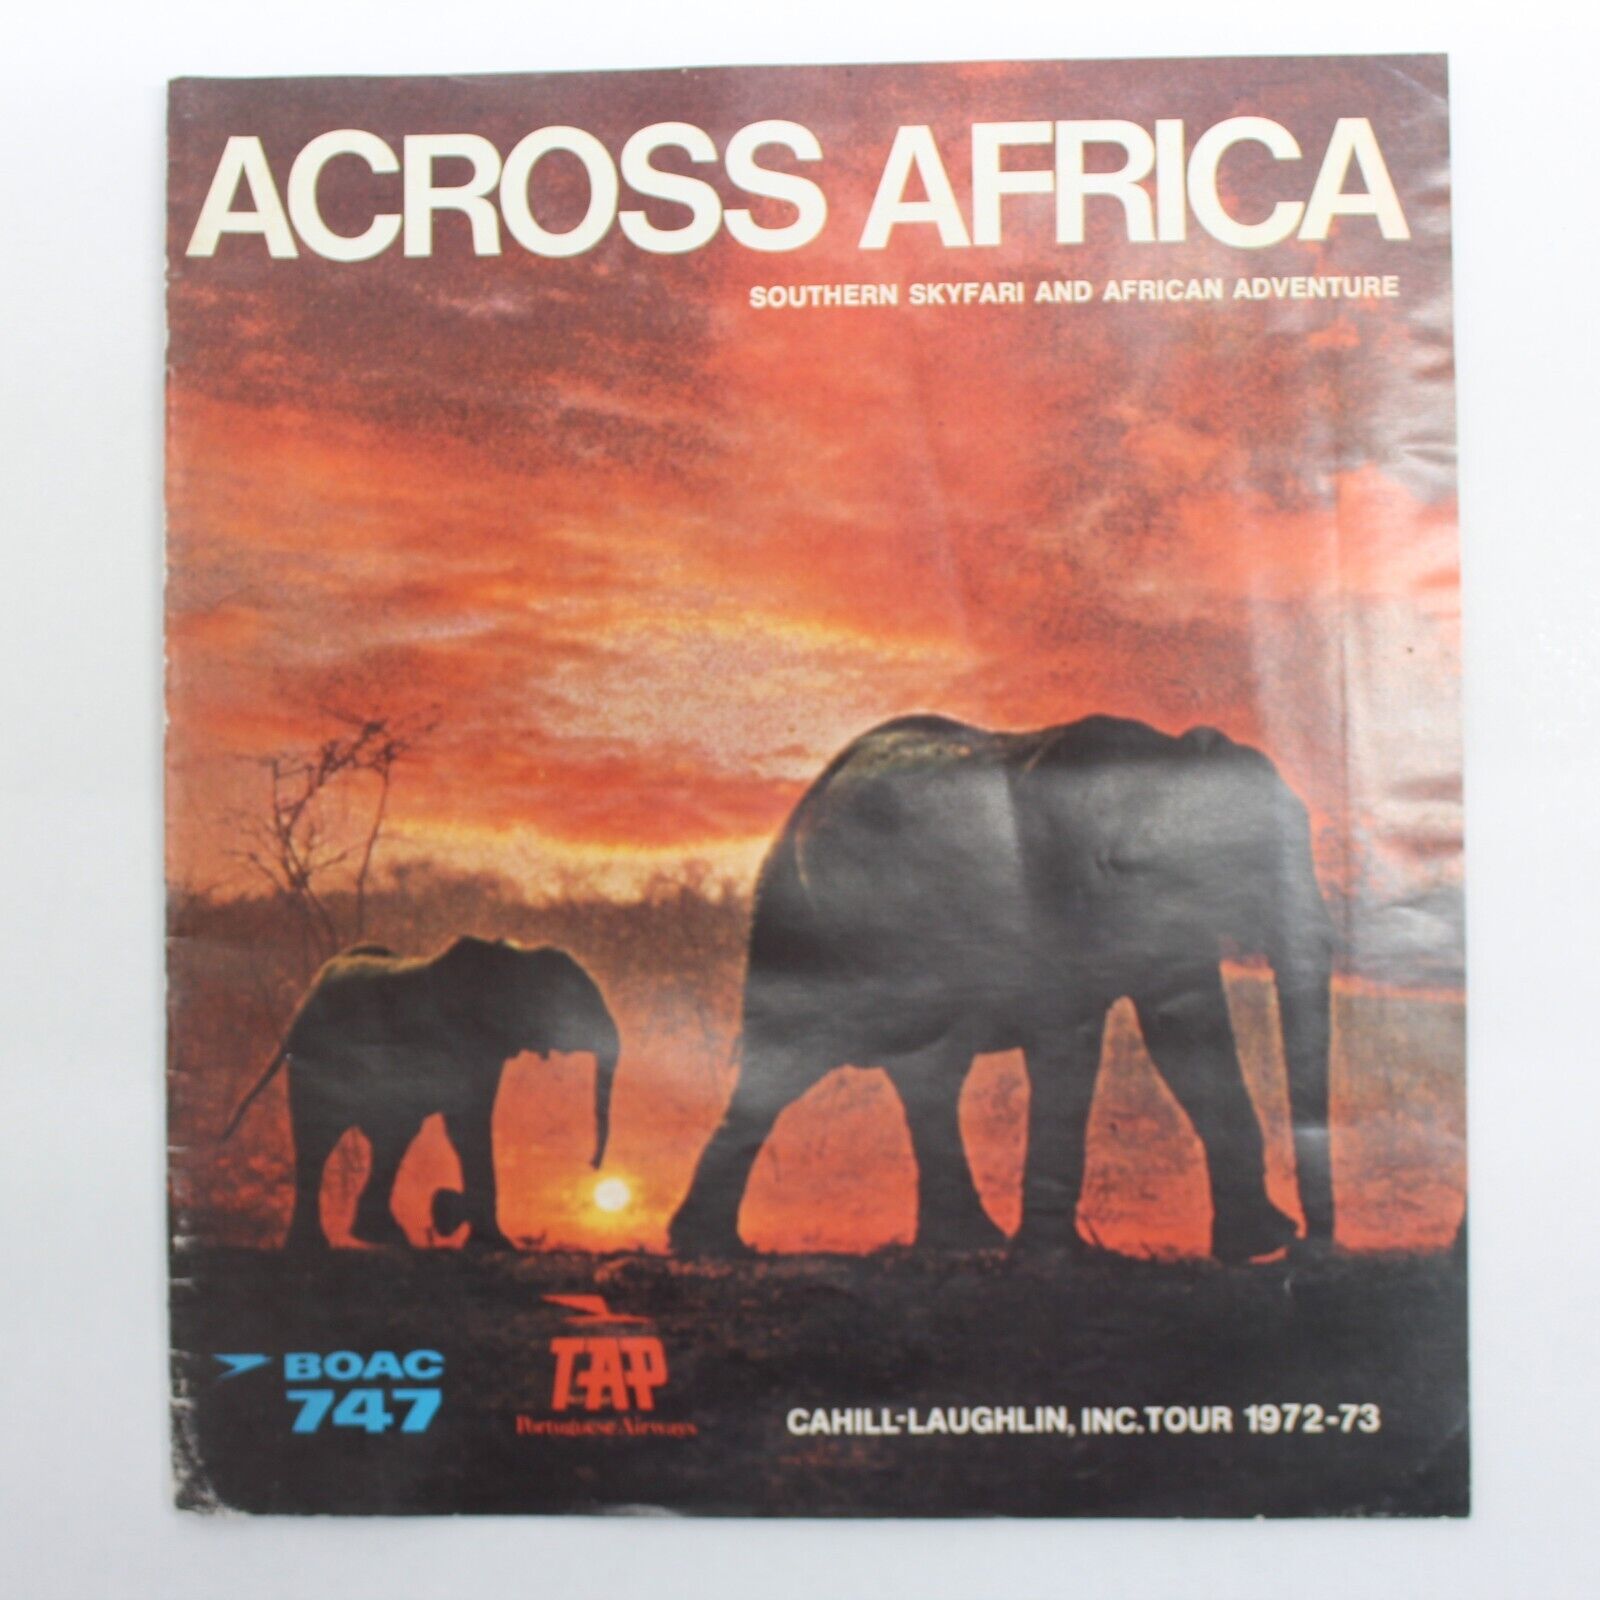 Across Africa Southern Skyfari and African Adventure Travel Brochure VTG 1972-73